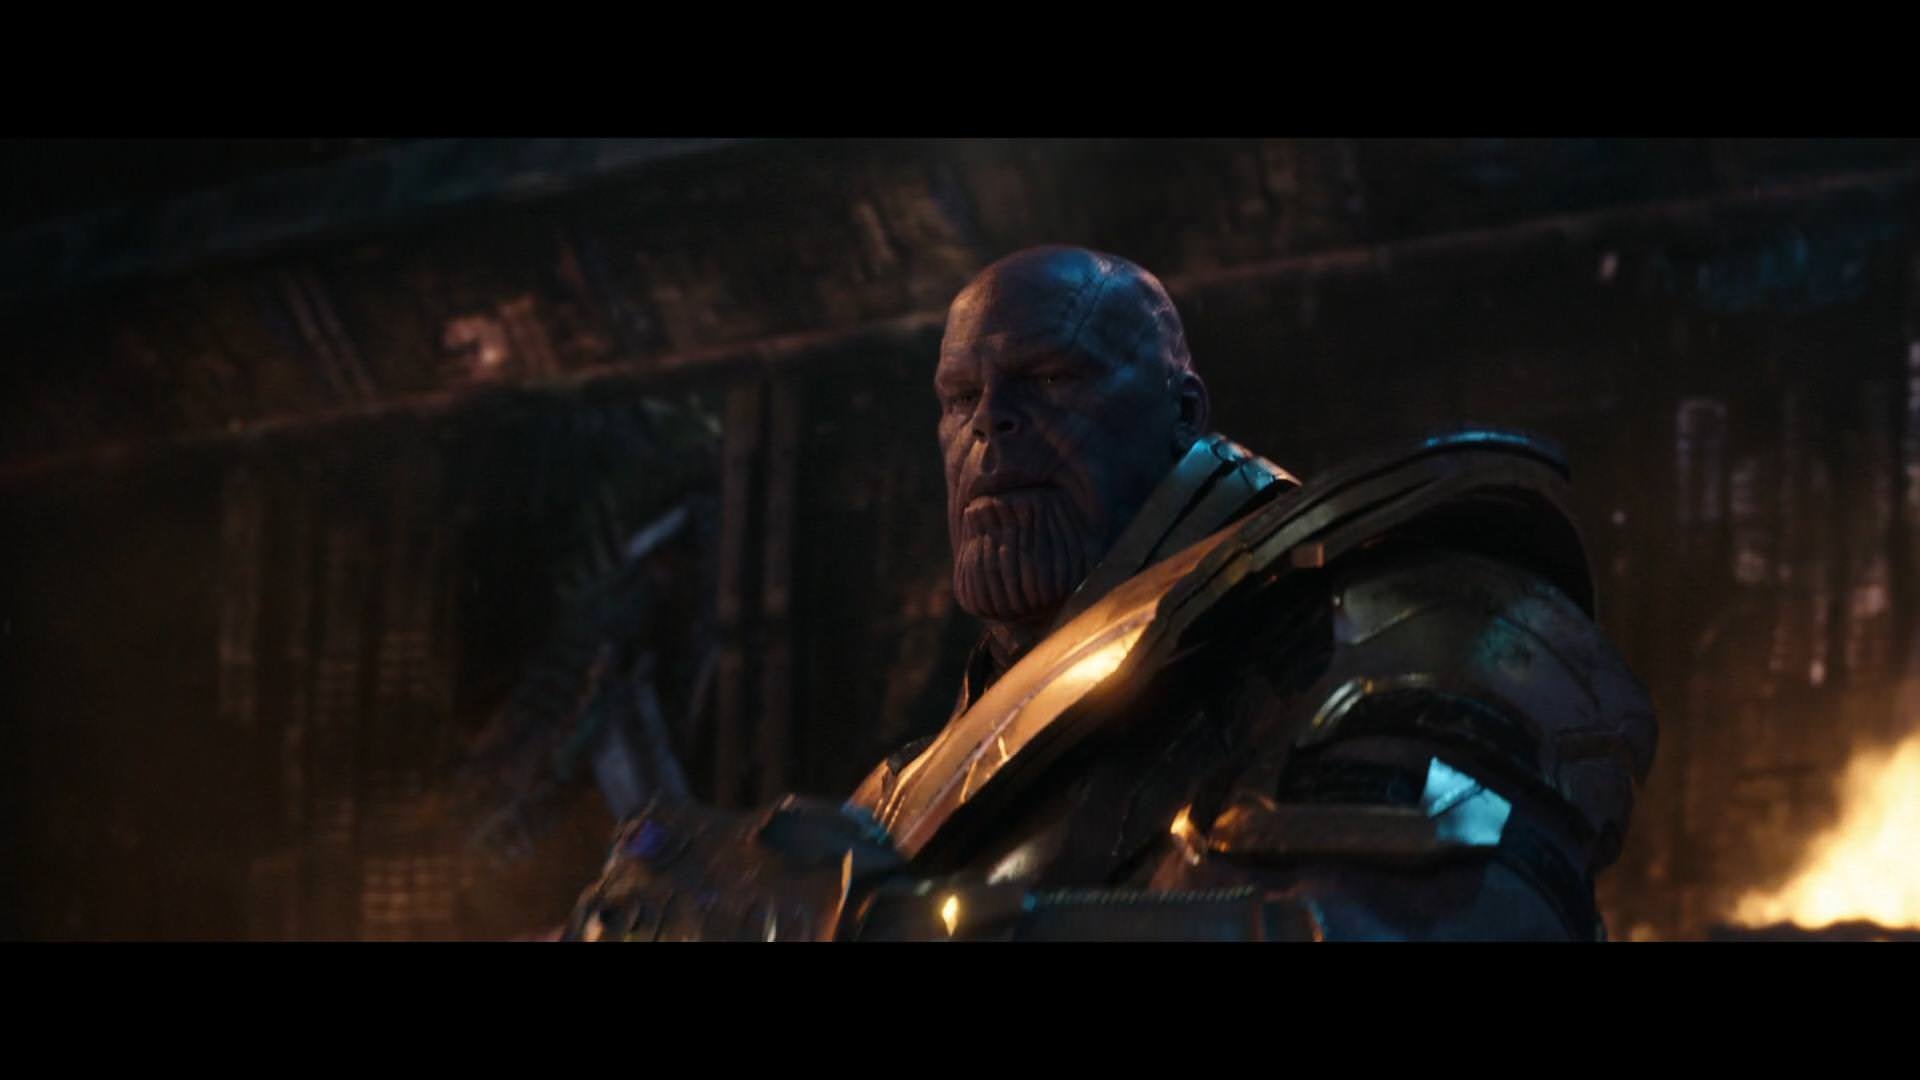 Does Thanos have arm hair?